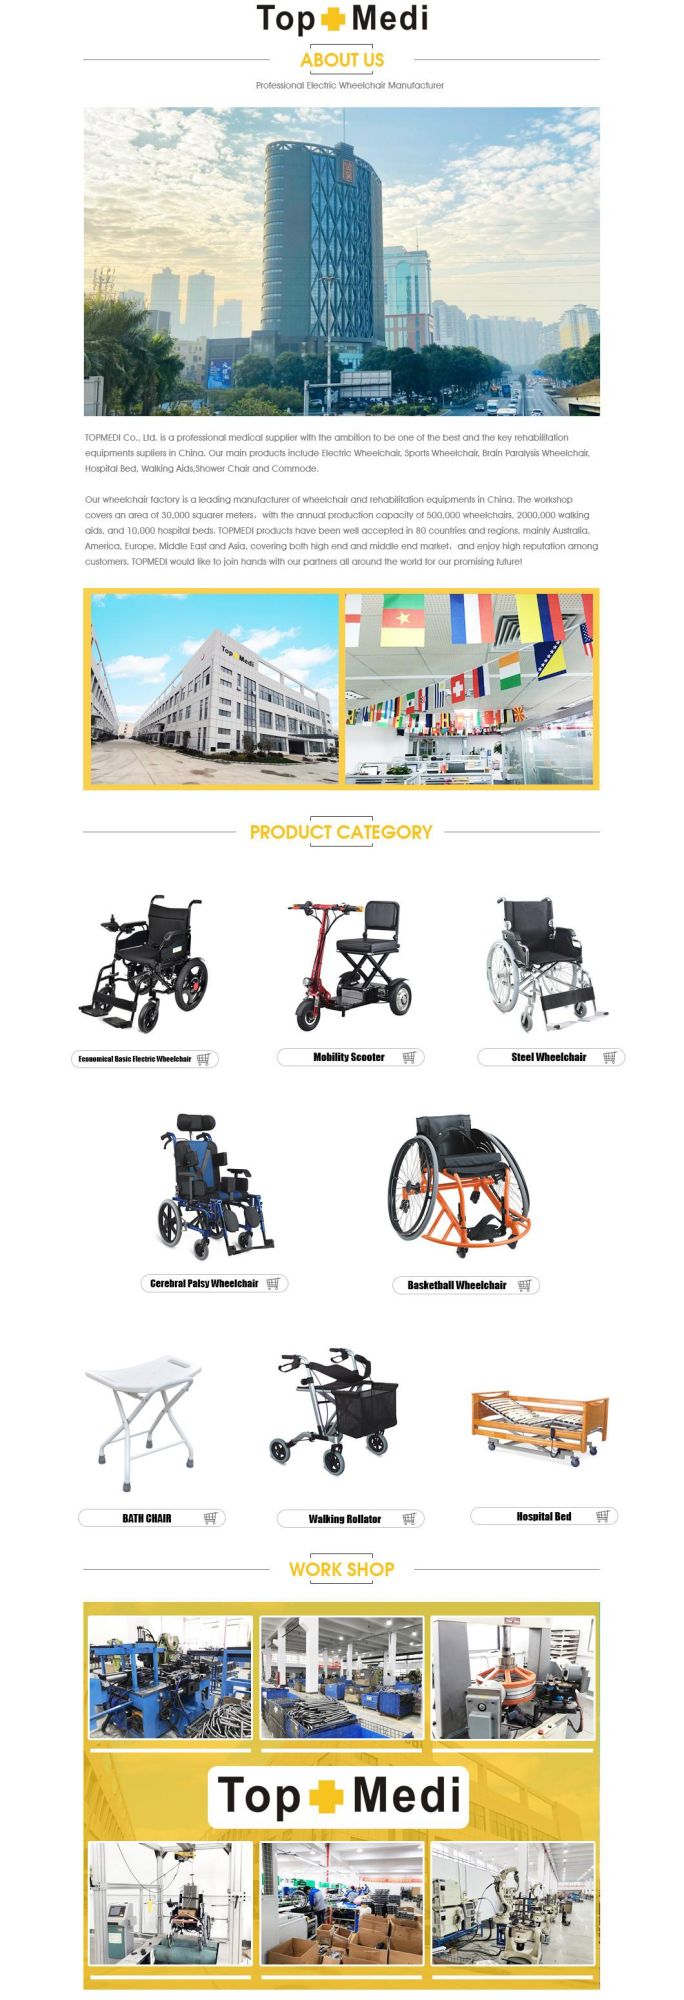 Topmedi Wheelchair Overweight Steel Wheelchair with Powder Coating Steel Frame